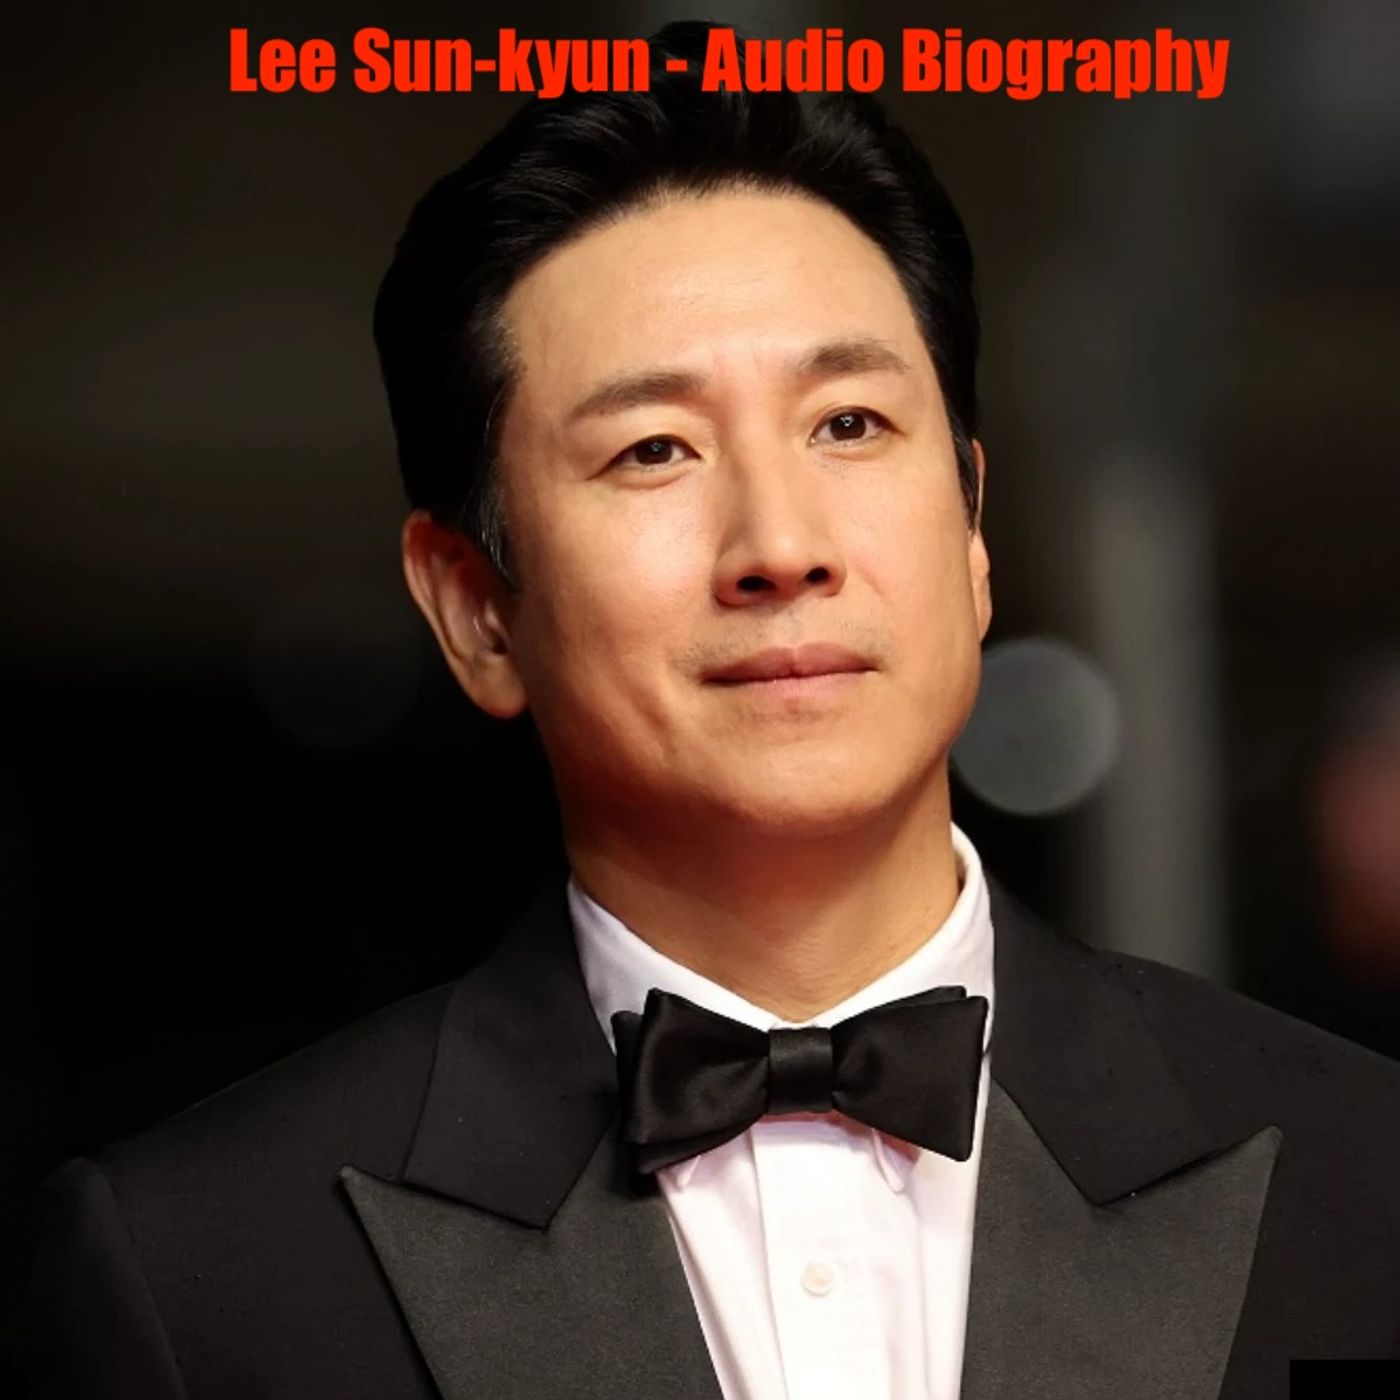 Lee Sun-kyun - Aidio Biography